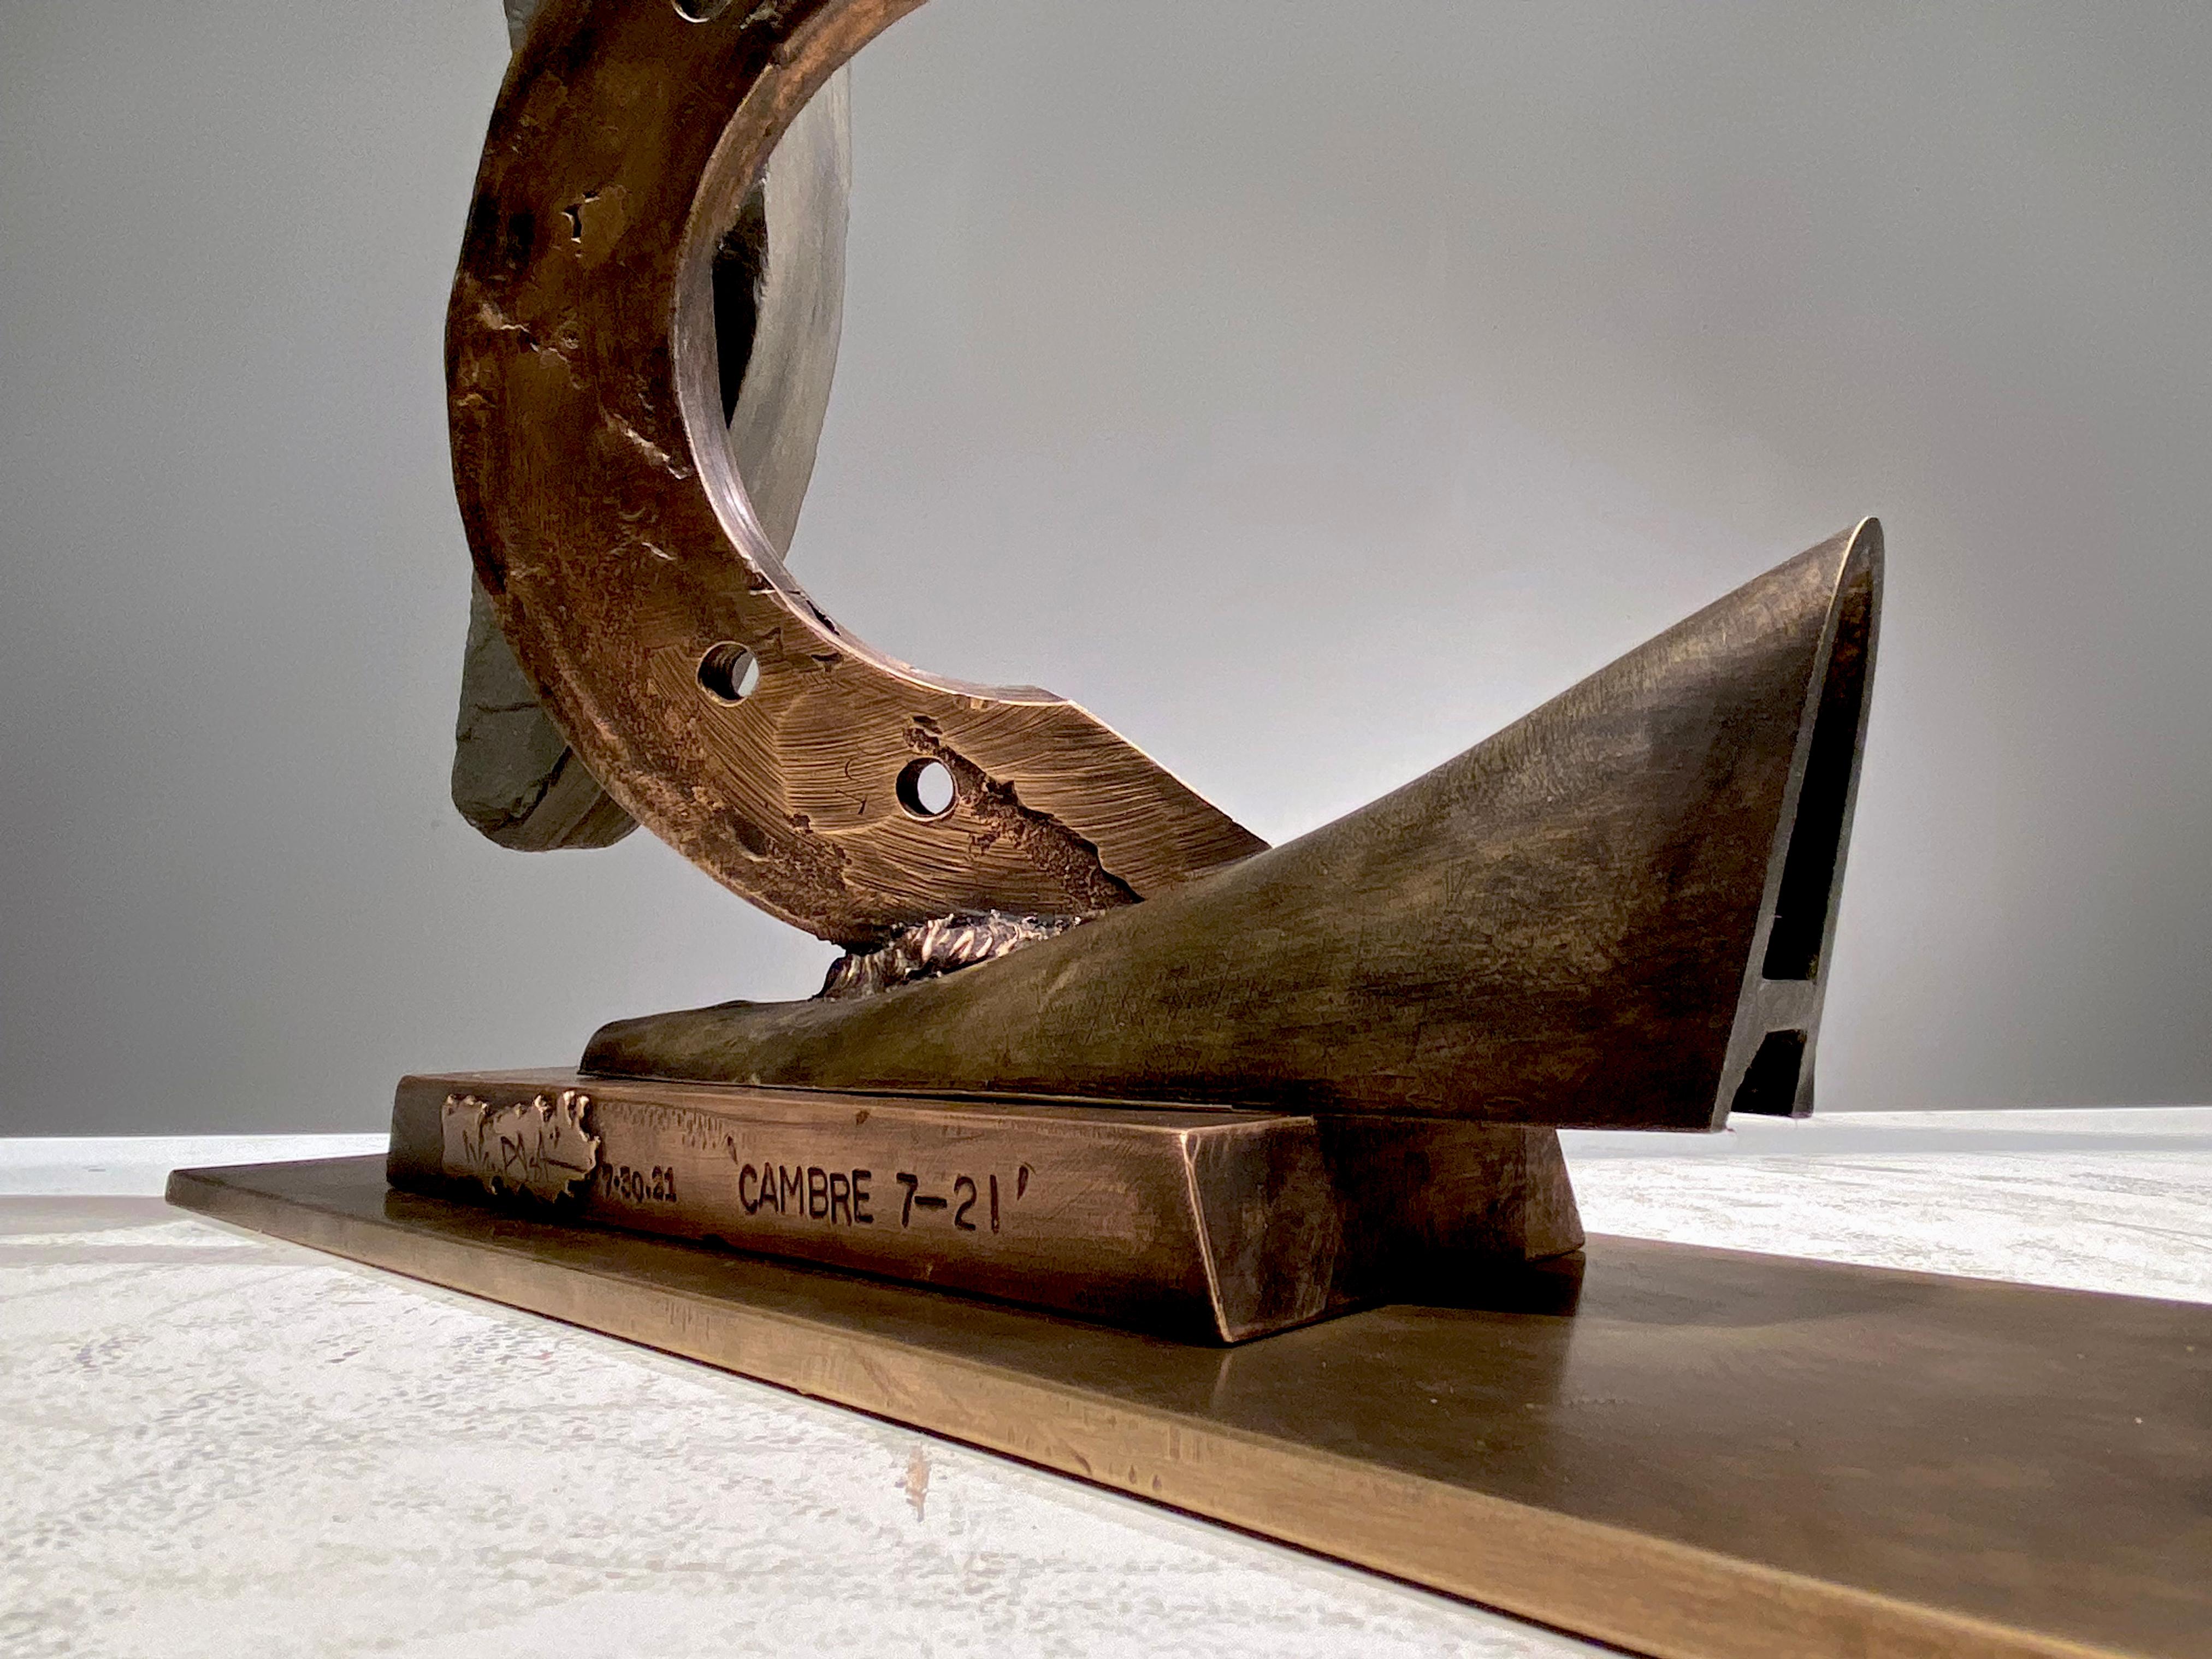 Cambre 7-21 - Contemporary Sculpture by John Van Alstine